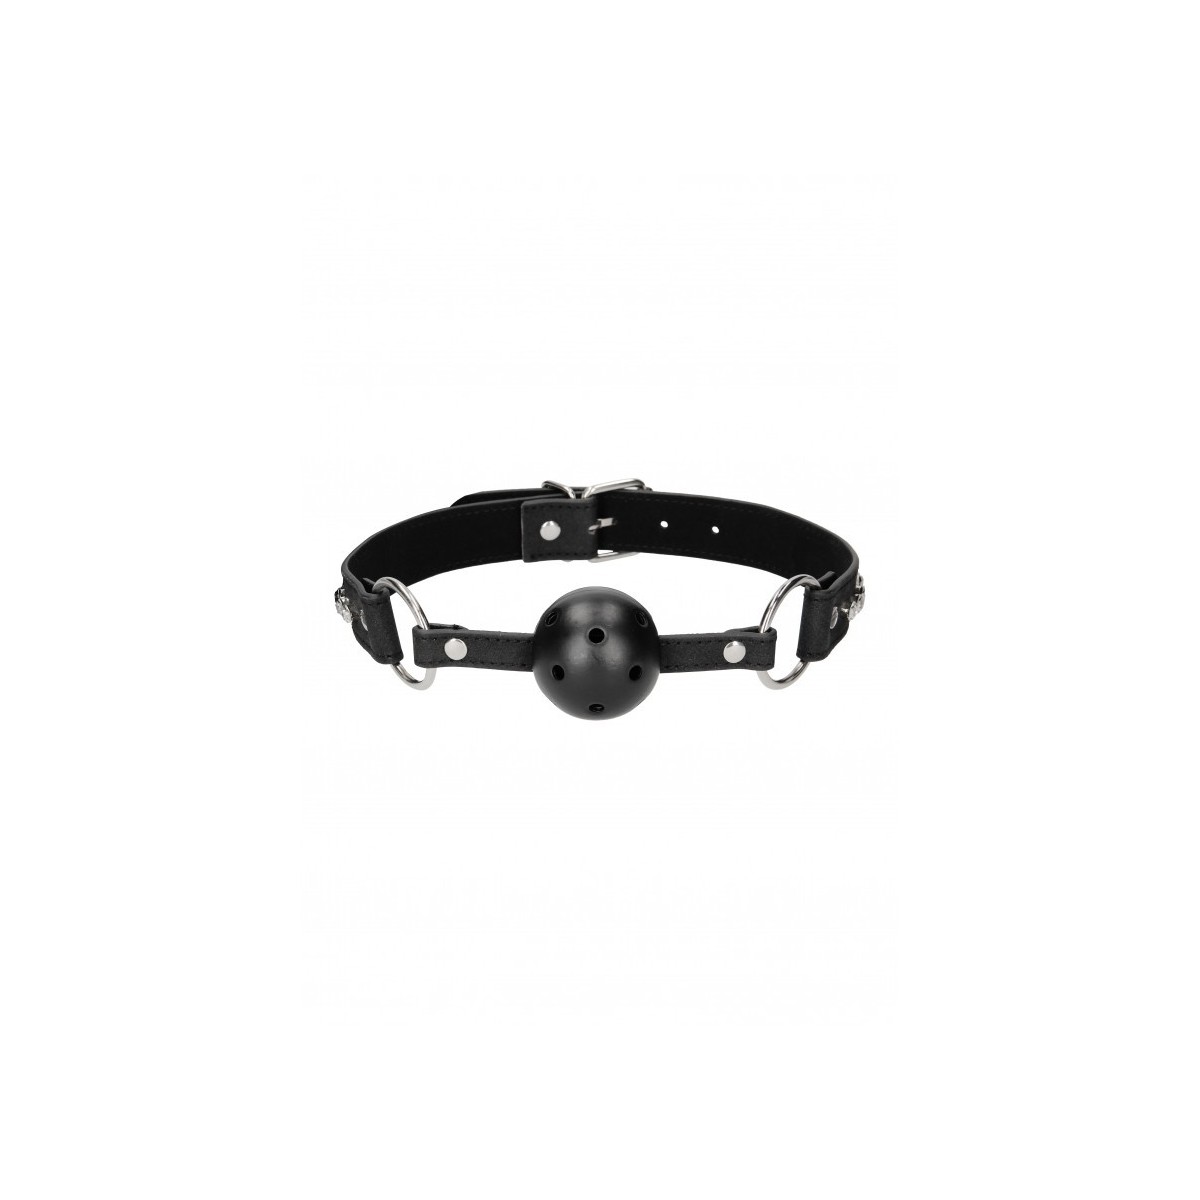 Morso con strass Breathable Ball Gag - with Diamond Studded Straps - Black